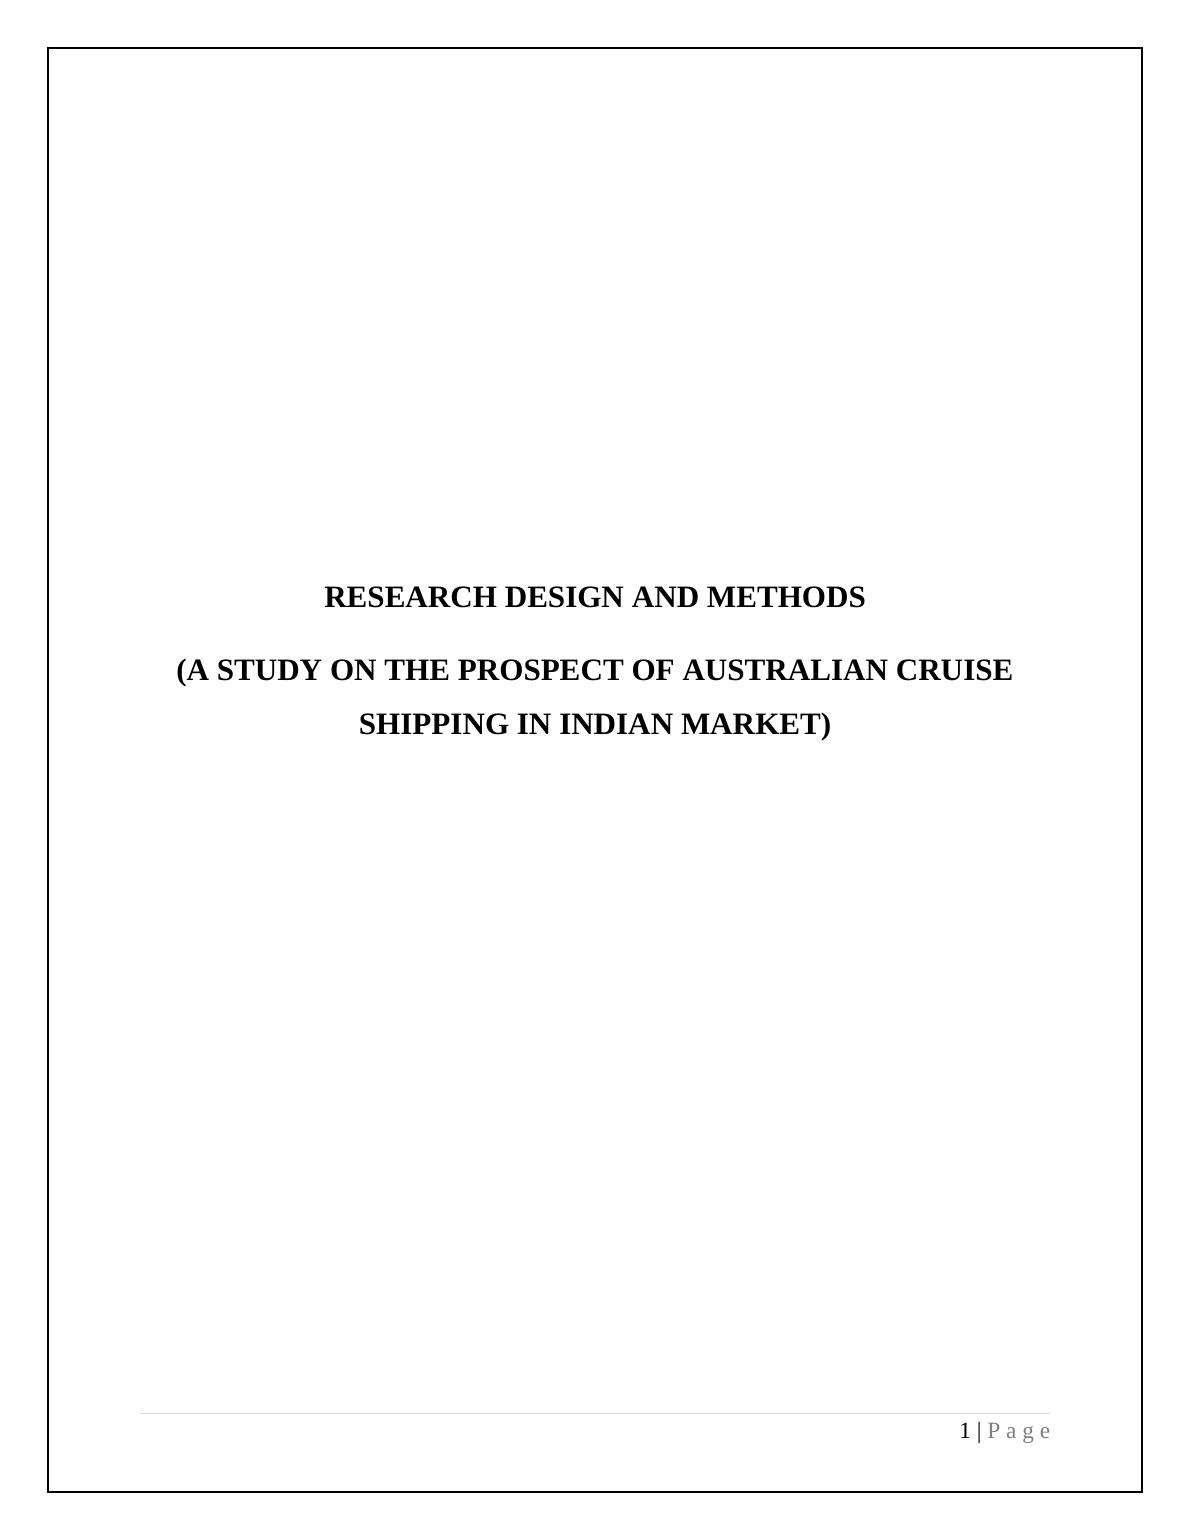 Report on Research Analysis of Marine Cruise Traveler_1